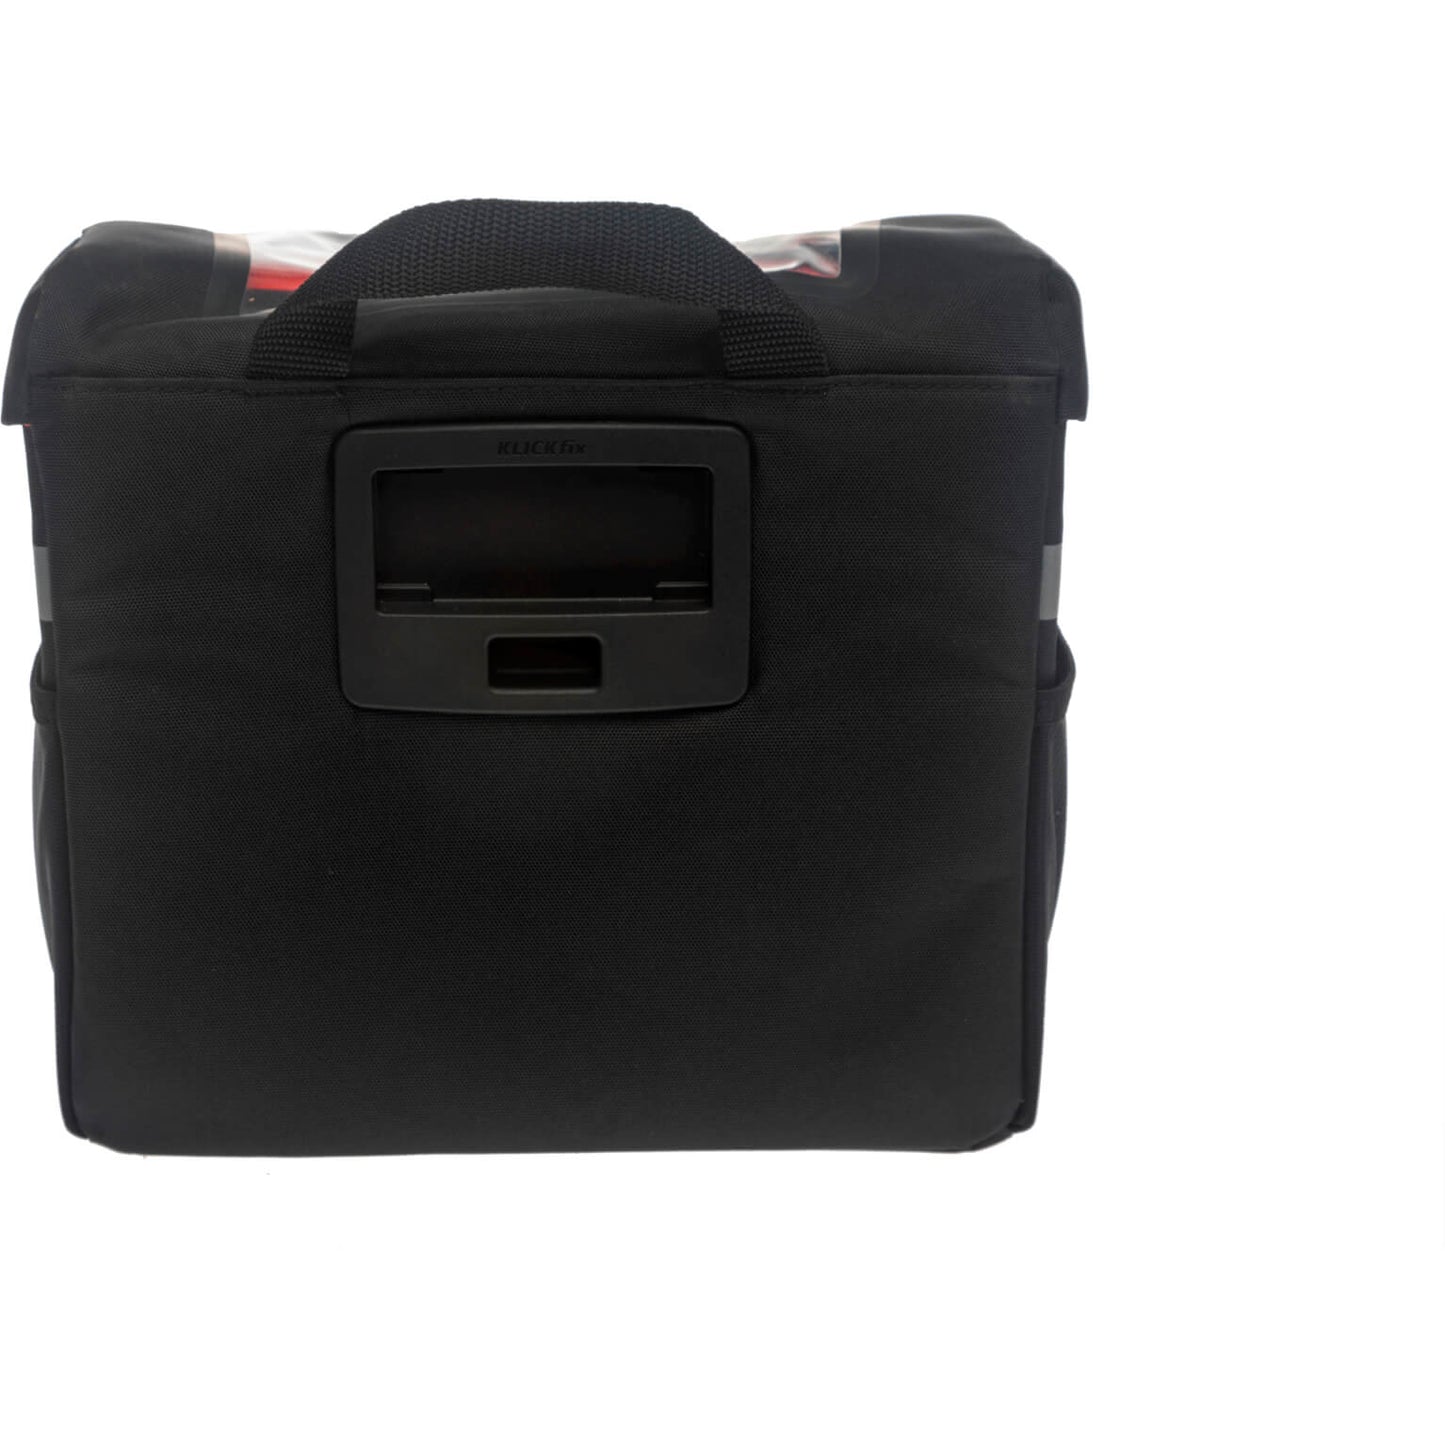 Bolsa del manillar de Vigo: bolsa de manillar deportiva, impermeable, reforzada, reflectante, negra